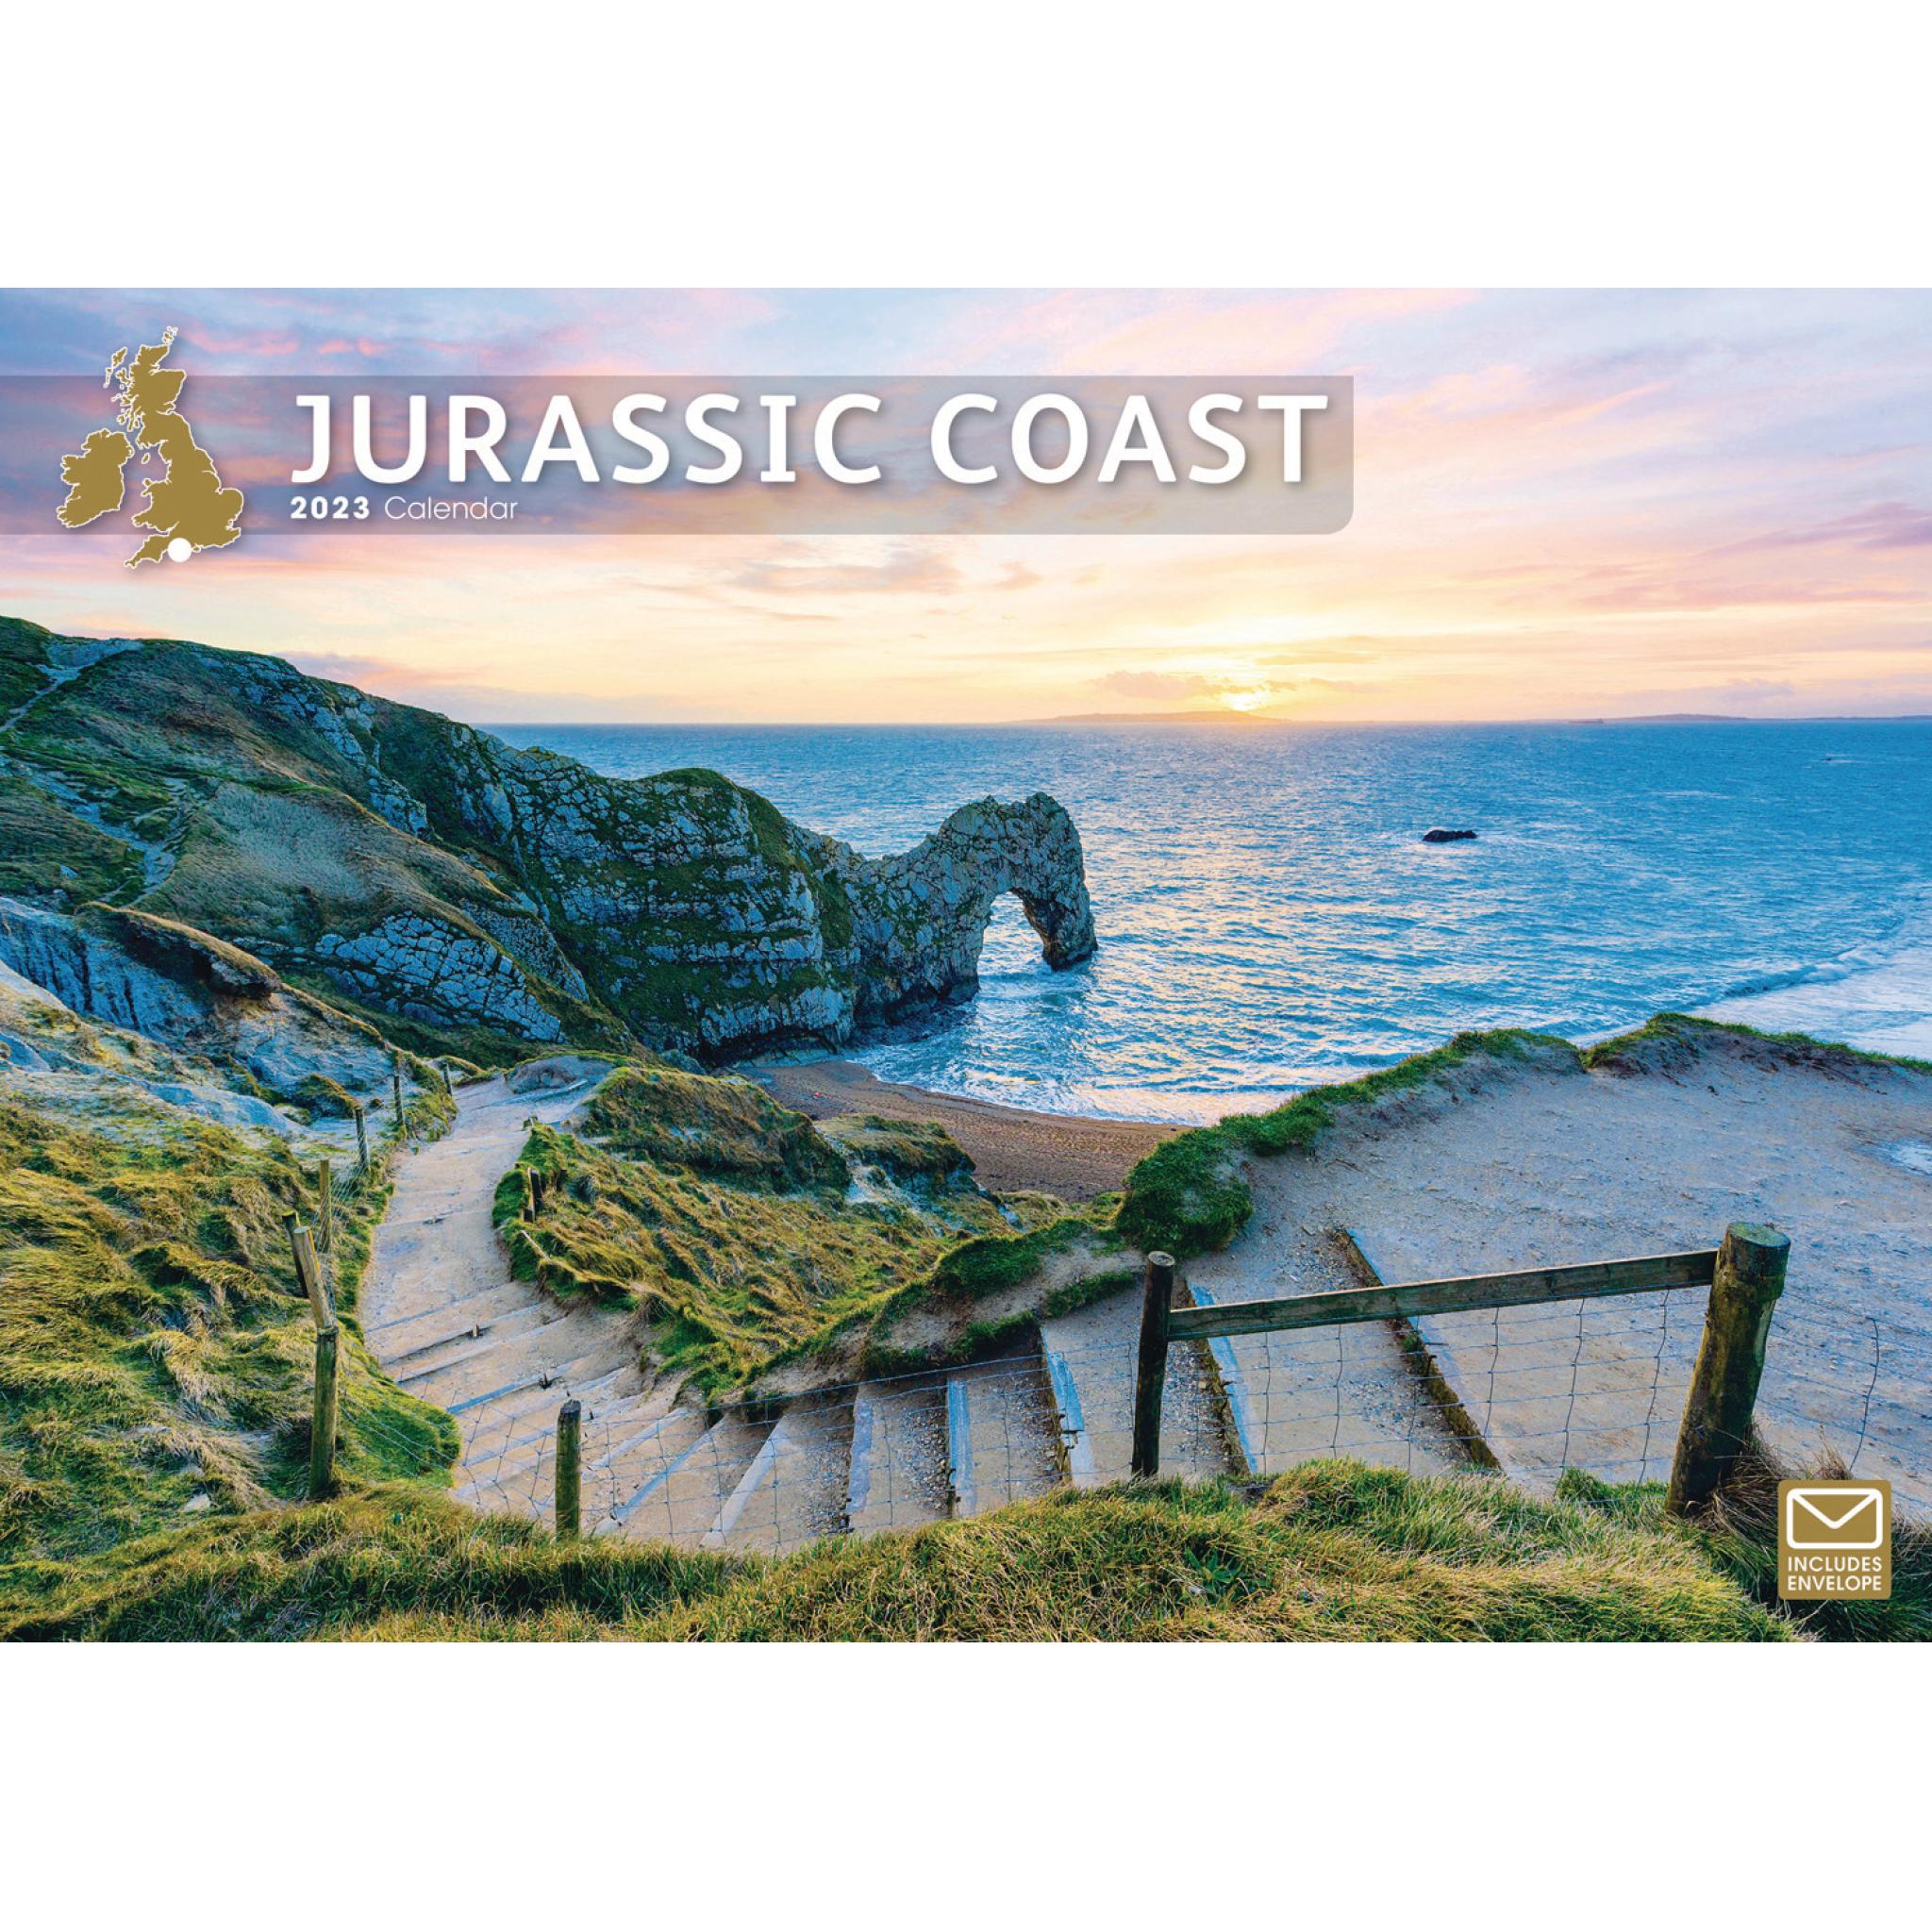 Jurassic Coast A4 Calendar 2023